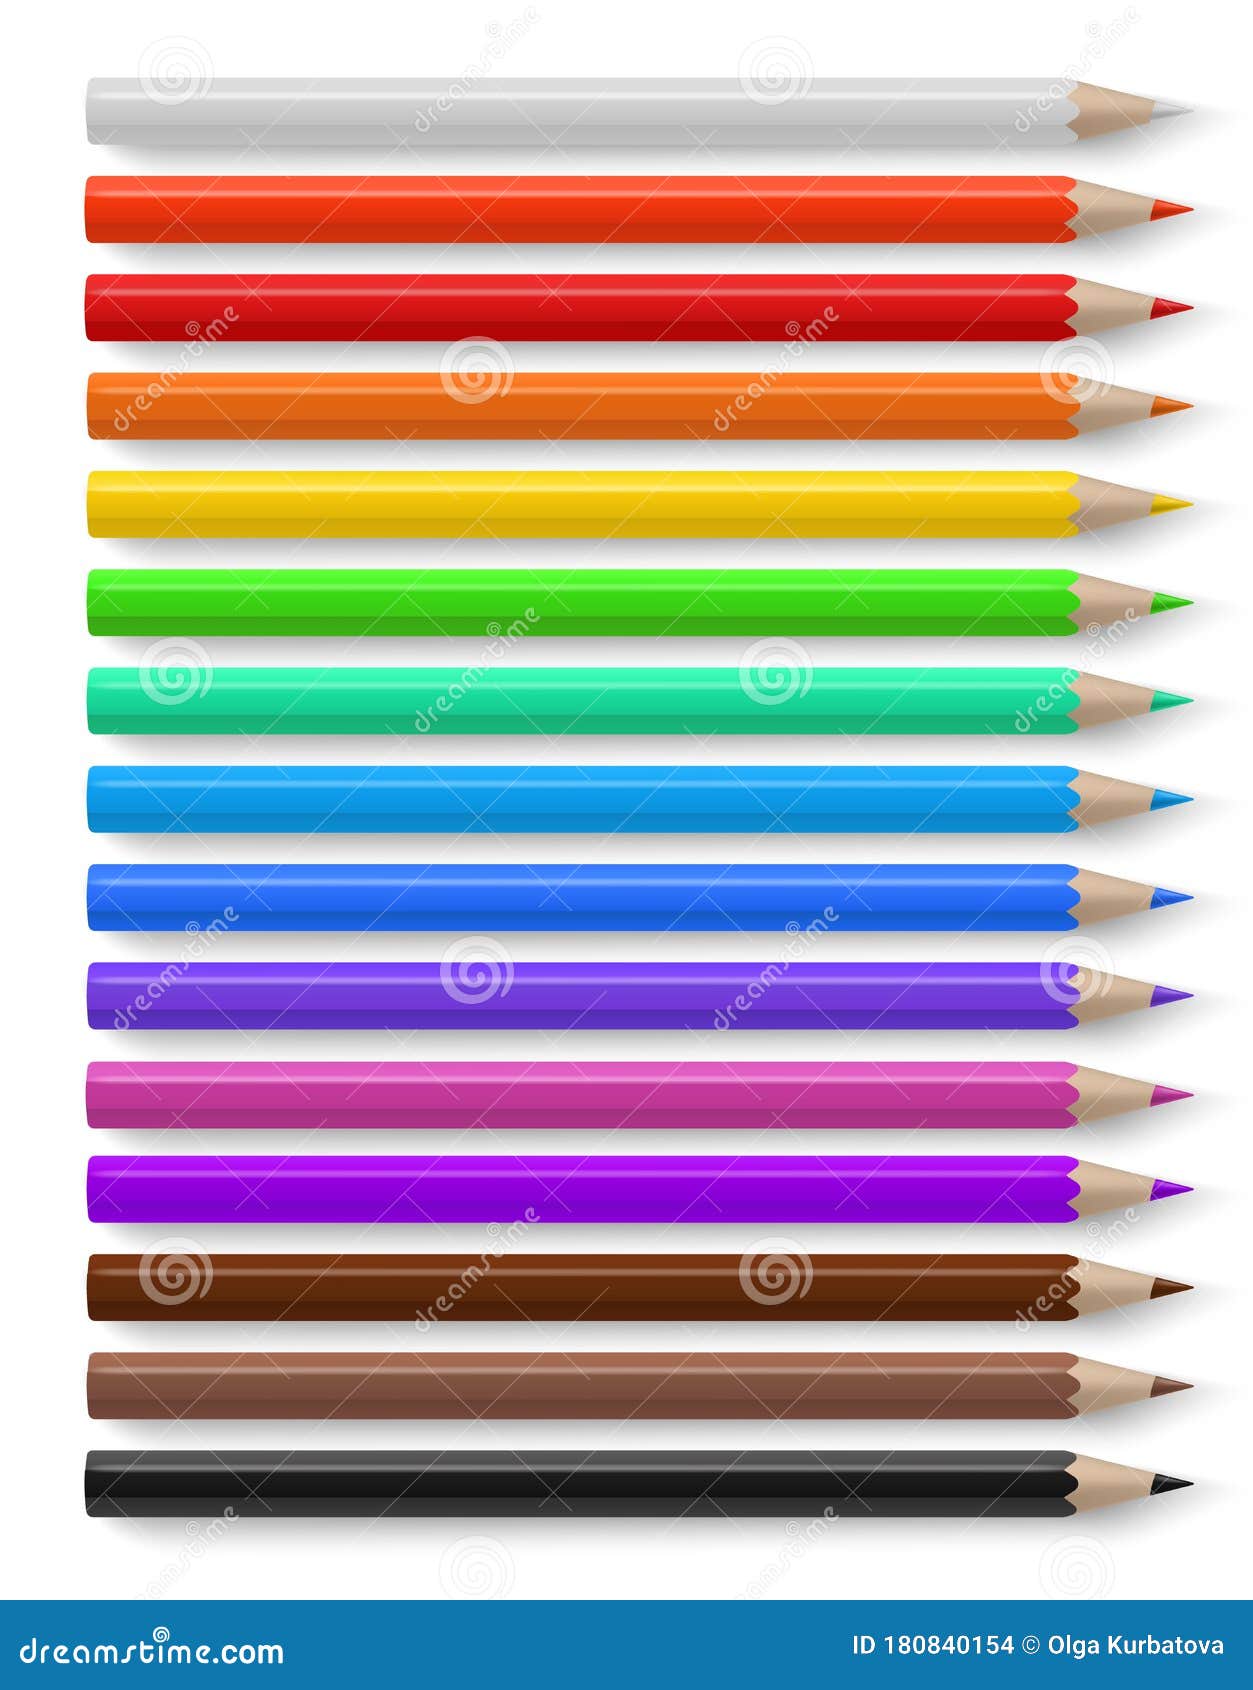 Rainbow colors order